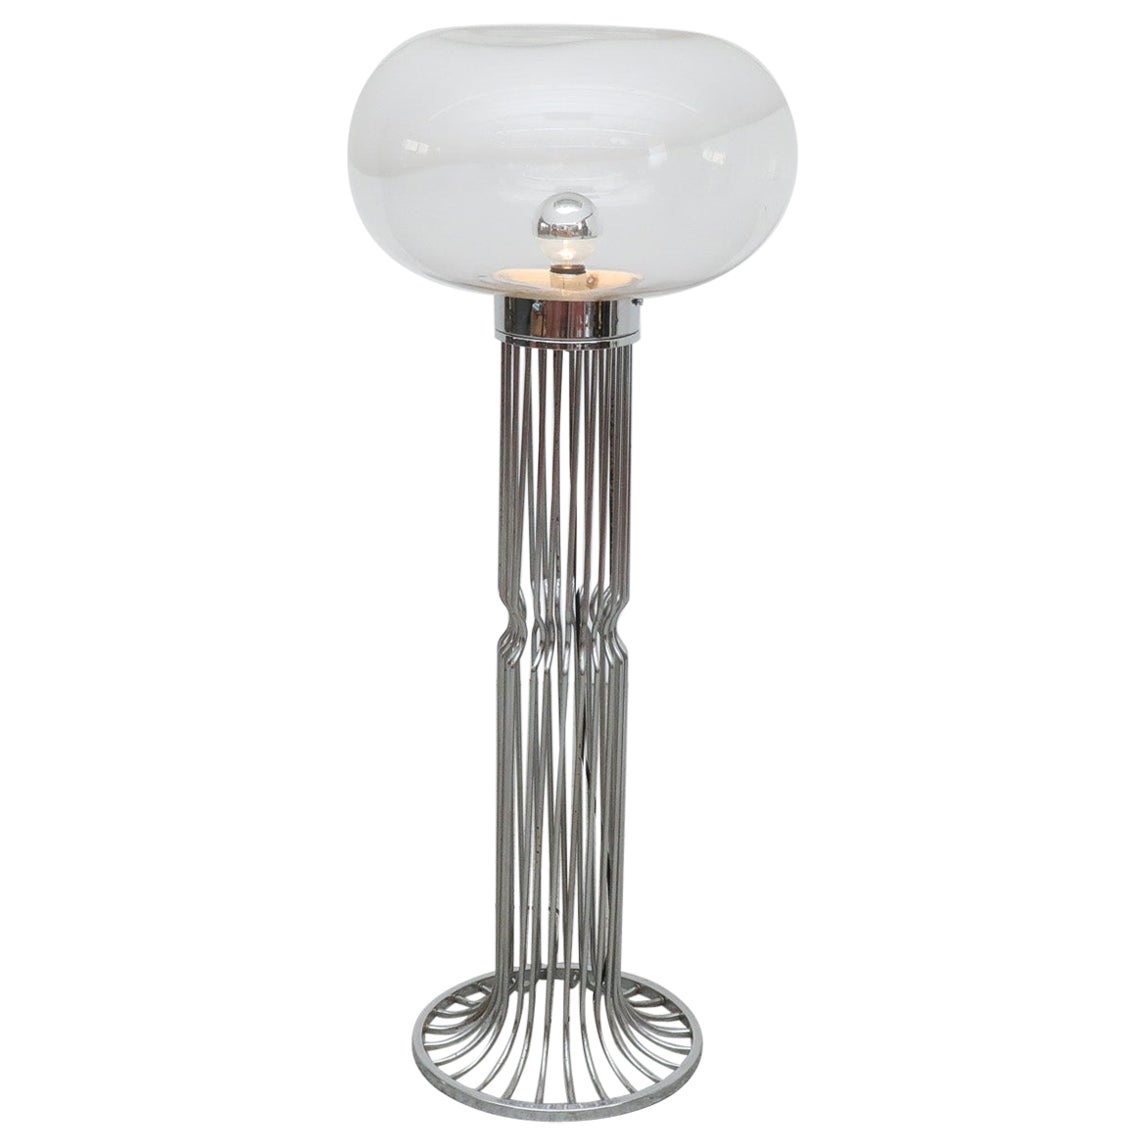 Carlo Nason (attr) Stehlampe mit Pilzmotiv aus geblasenem Glas, Pilz